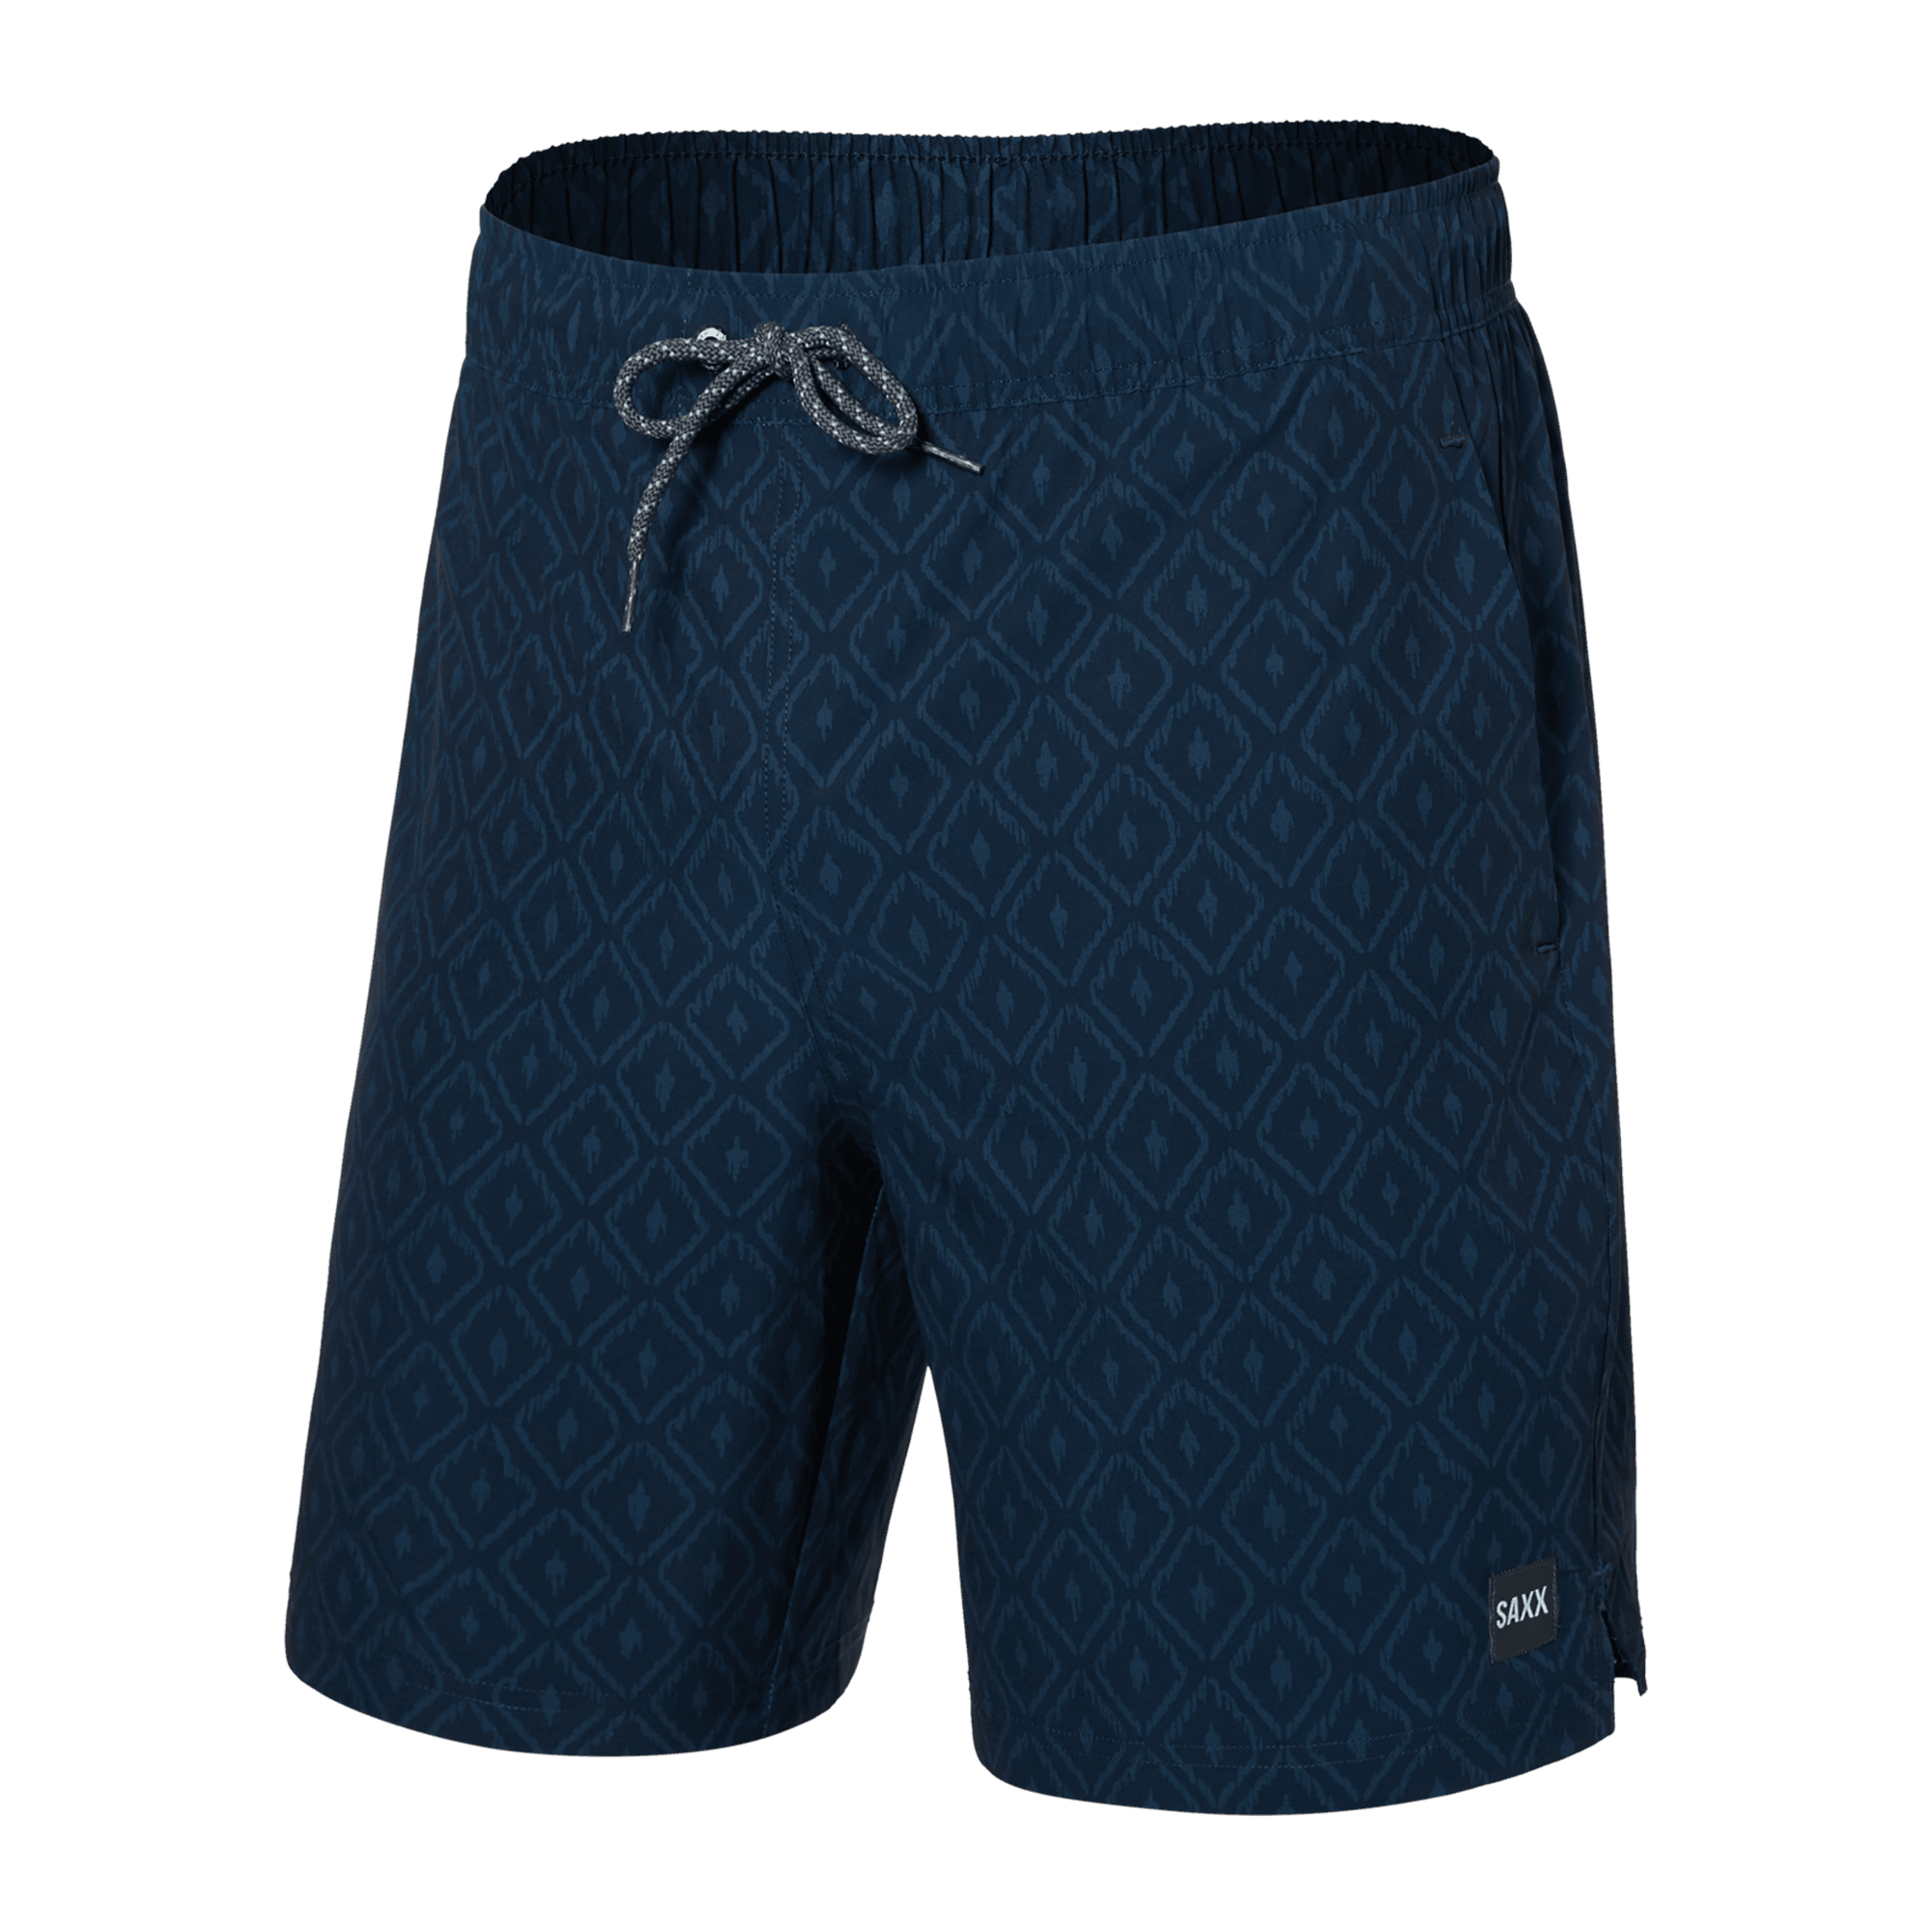 Saxx Men's Multi Sport 2N1 Shorts